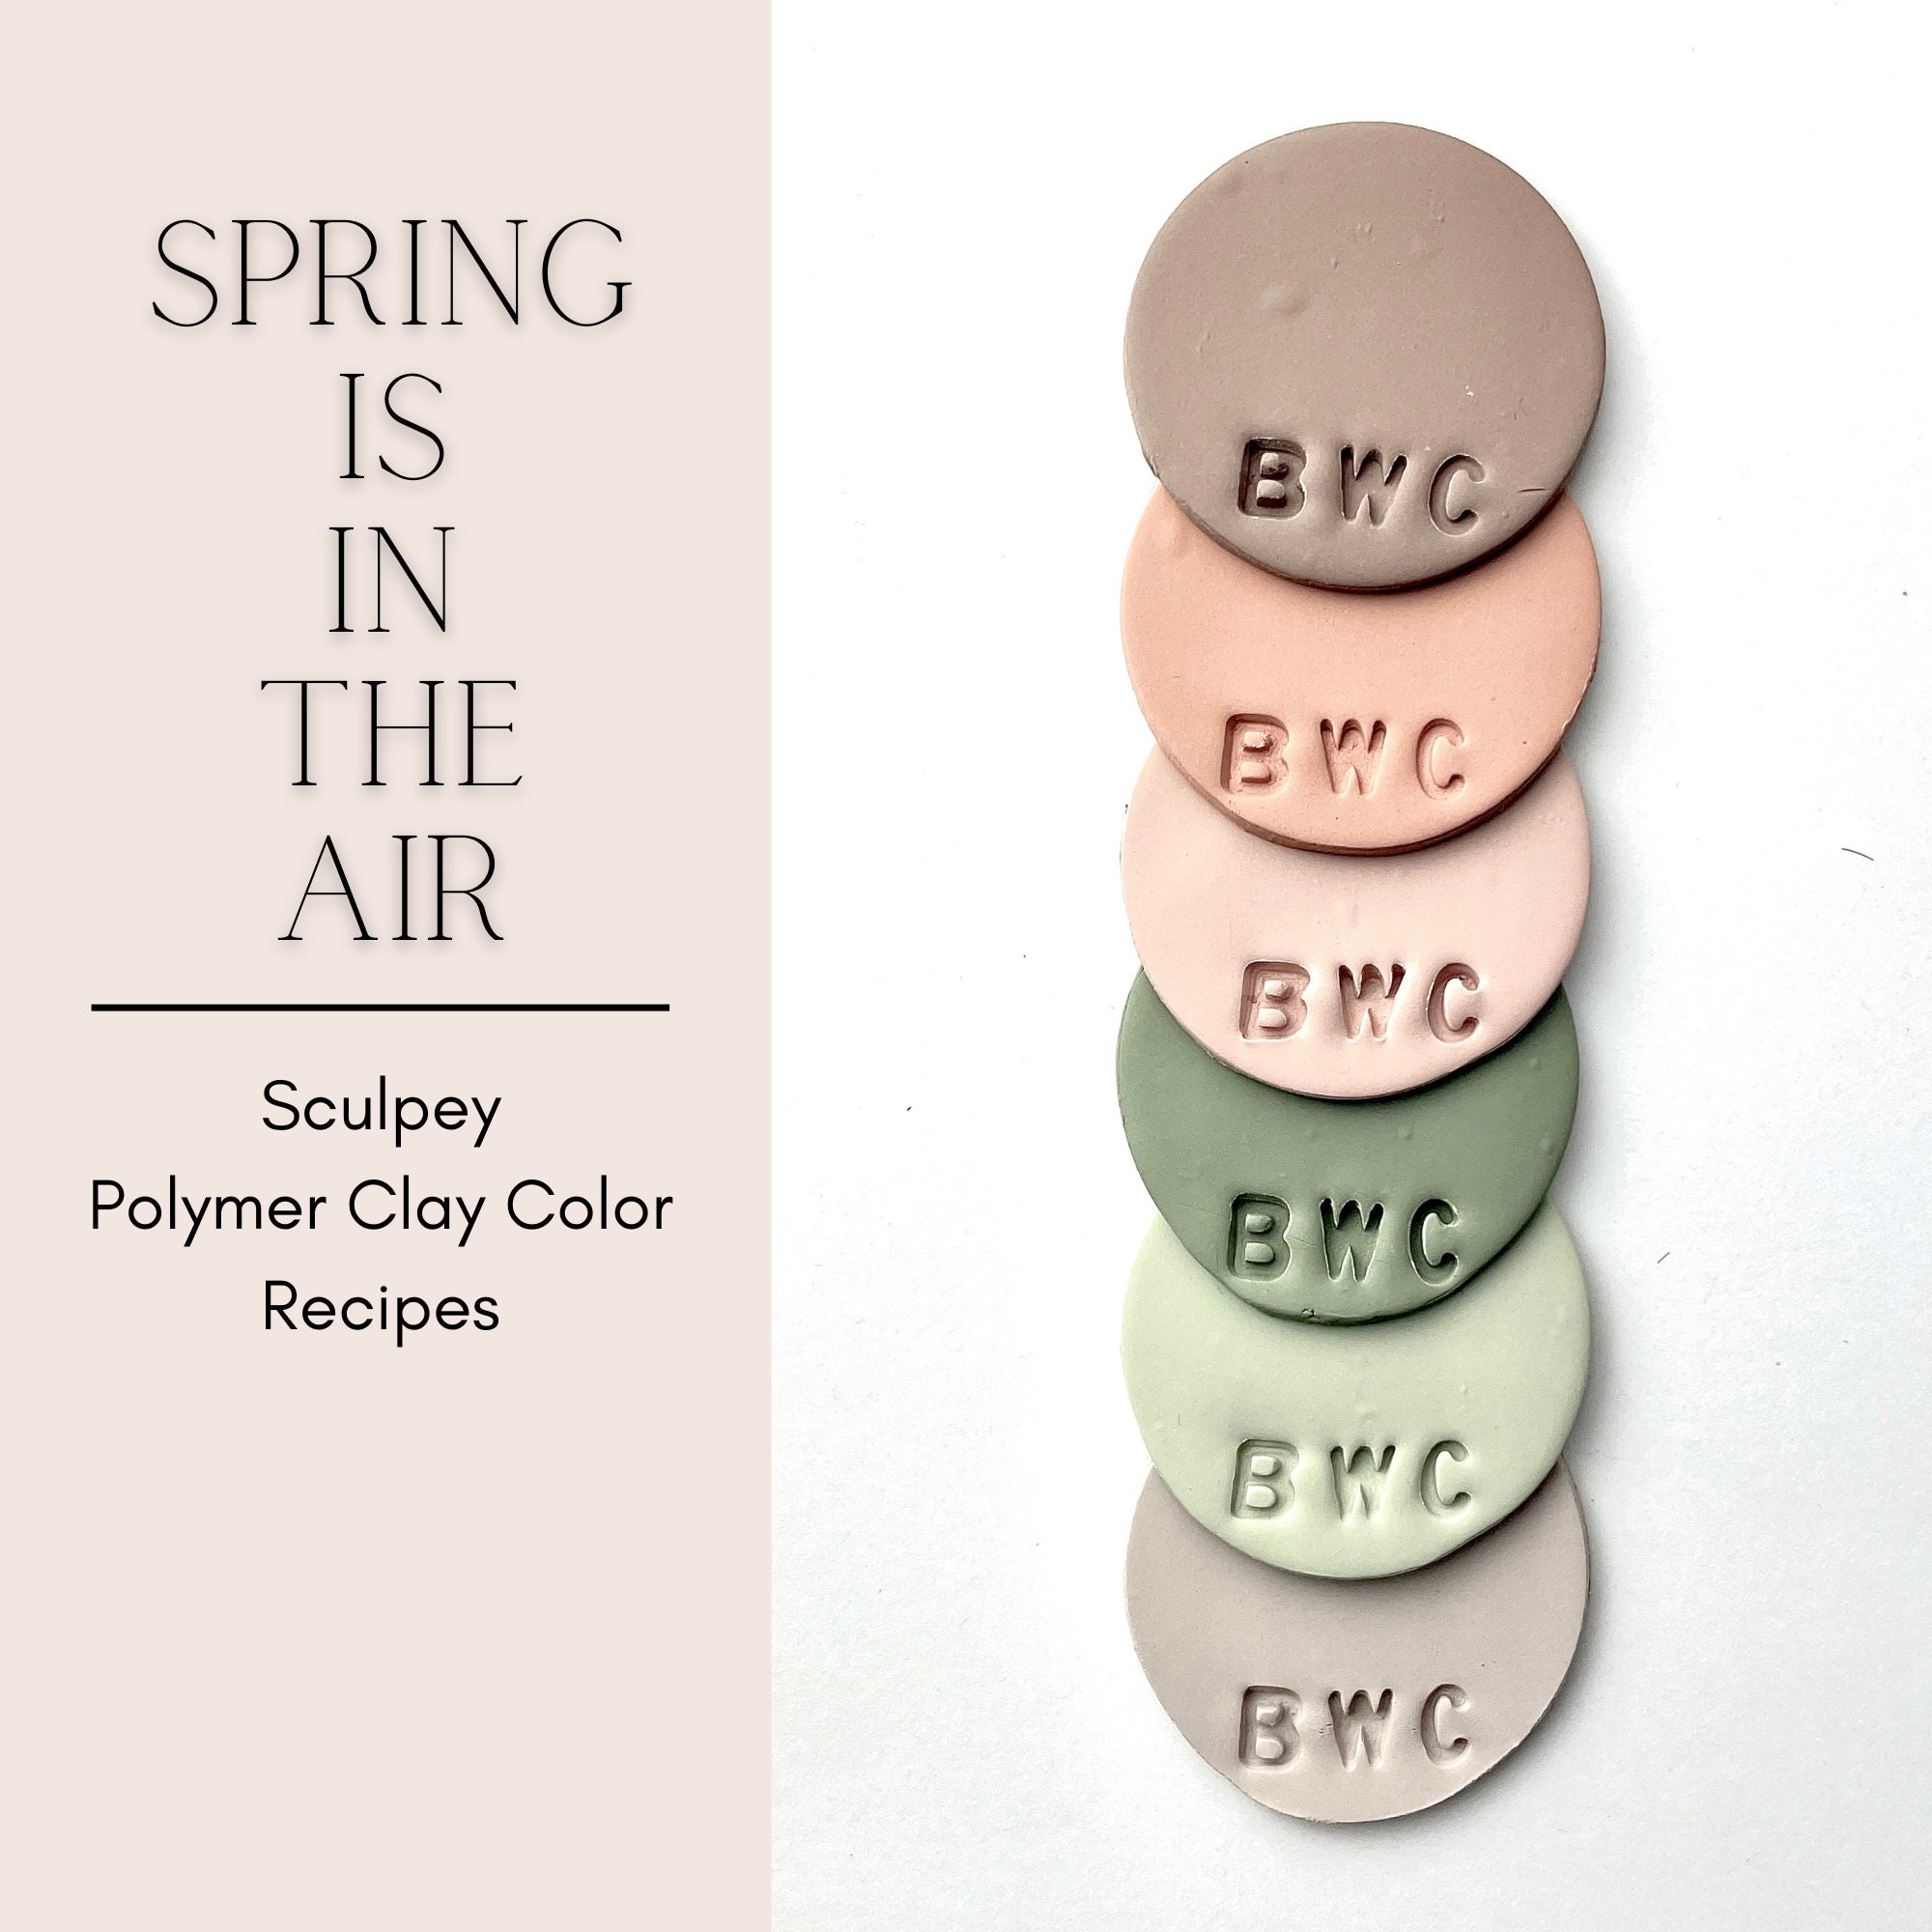 Citrus Sorbets, Sculpey Premo, Polymer Clay Color Recipes, Spring Summer  Palette, Bright Pastel Tones, Clay Mixing Tutorial 